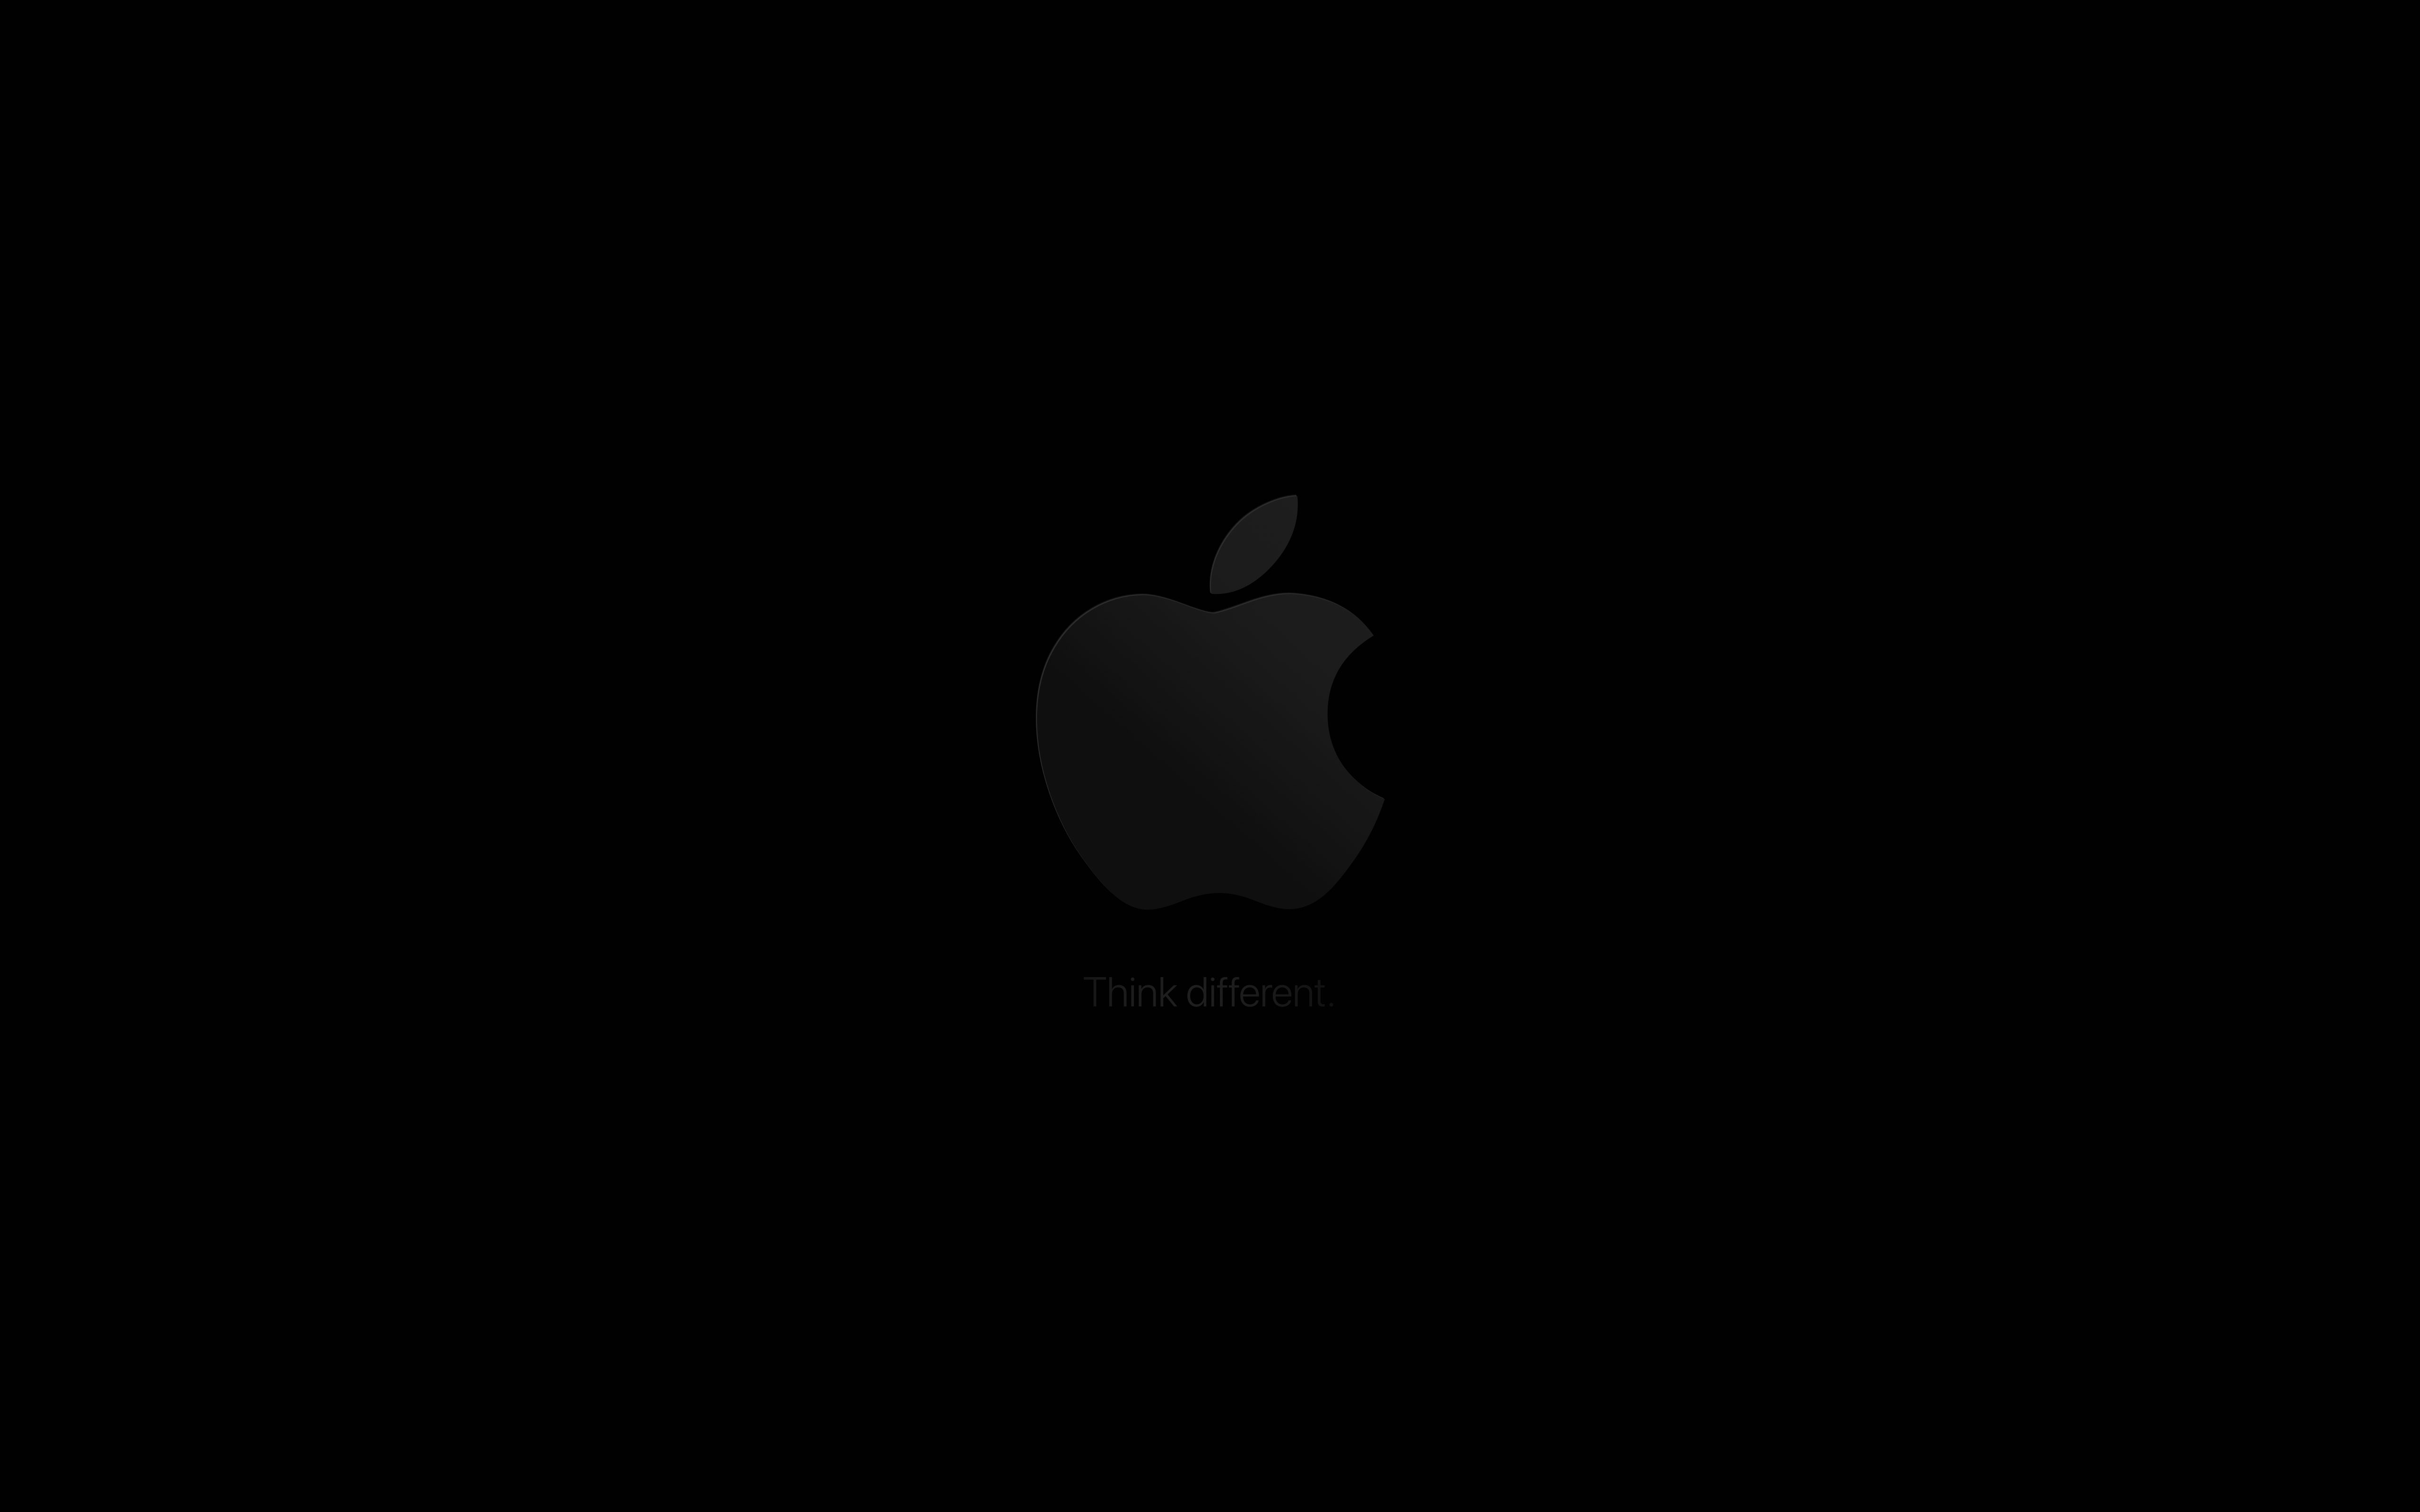 HD wallpaper, Dark Background, Minimal Logo, 5K, Think Different, Apple Logo